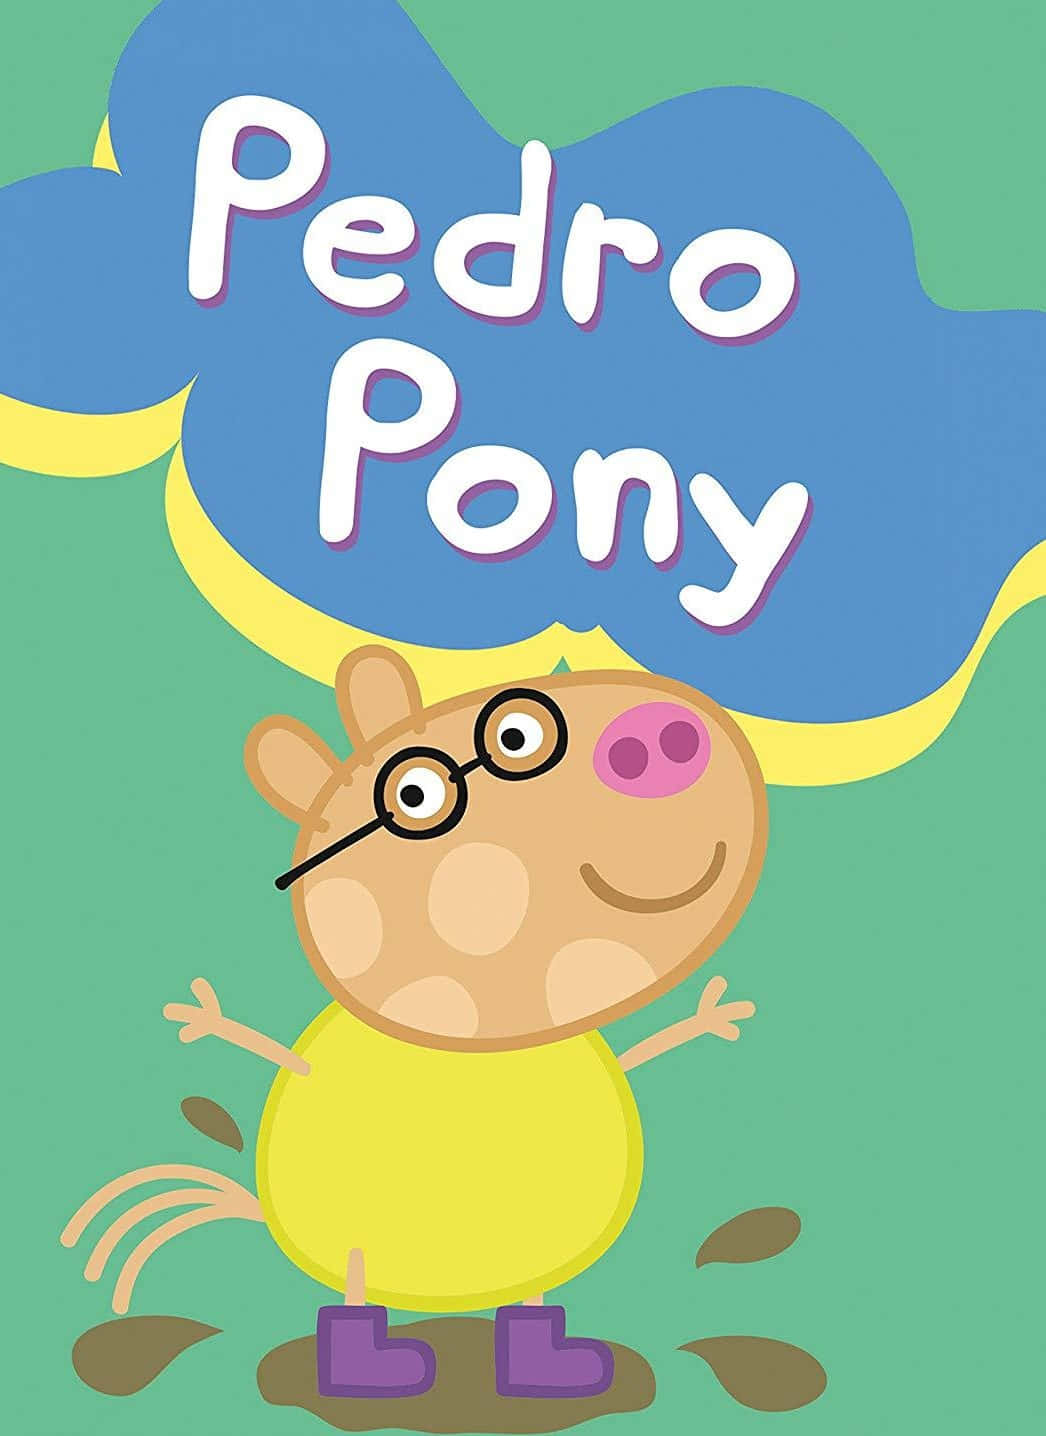 Pedro Pony having fun outdoors Wallpaper